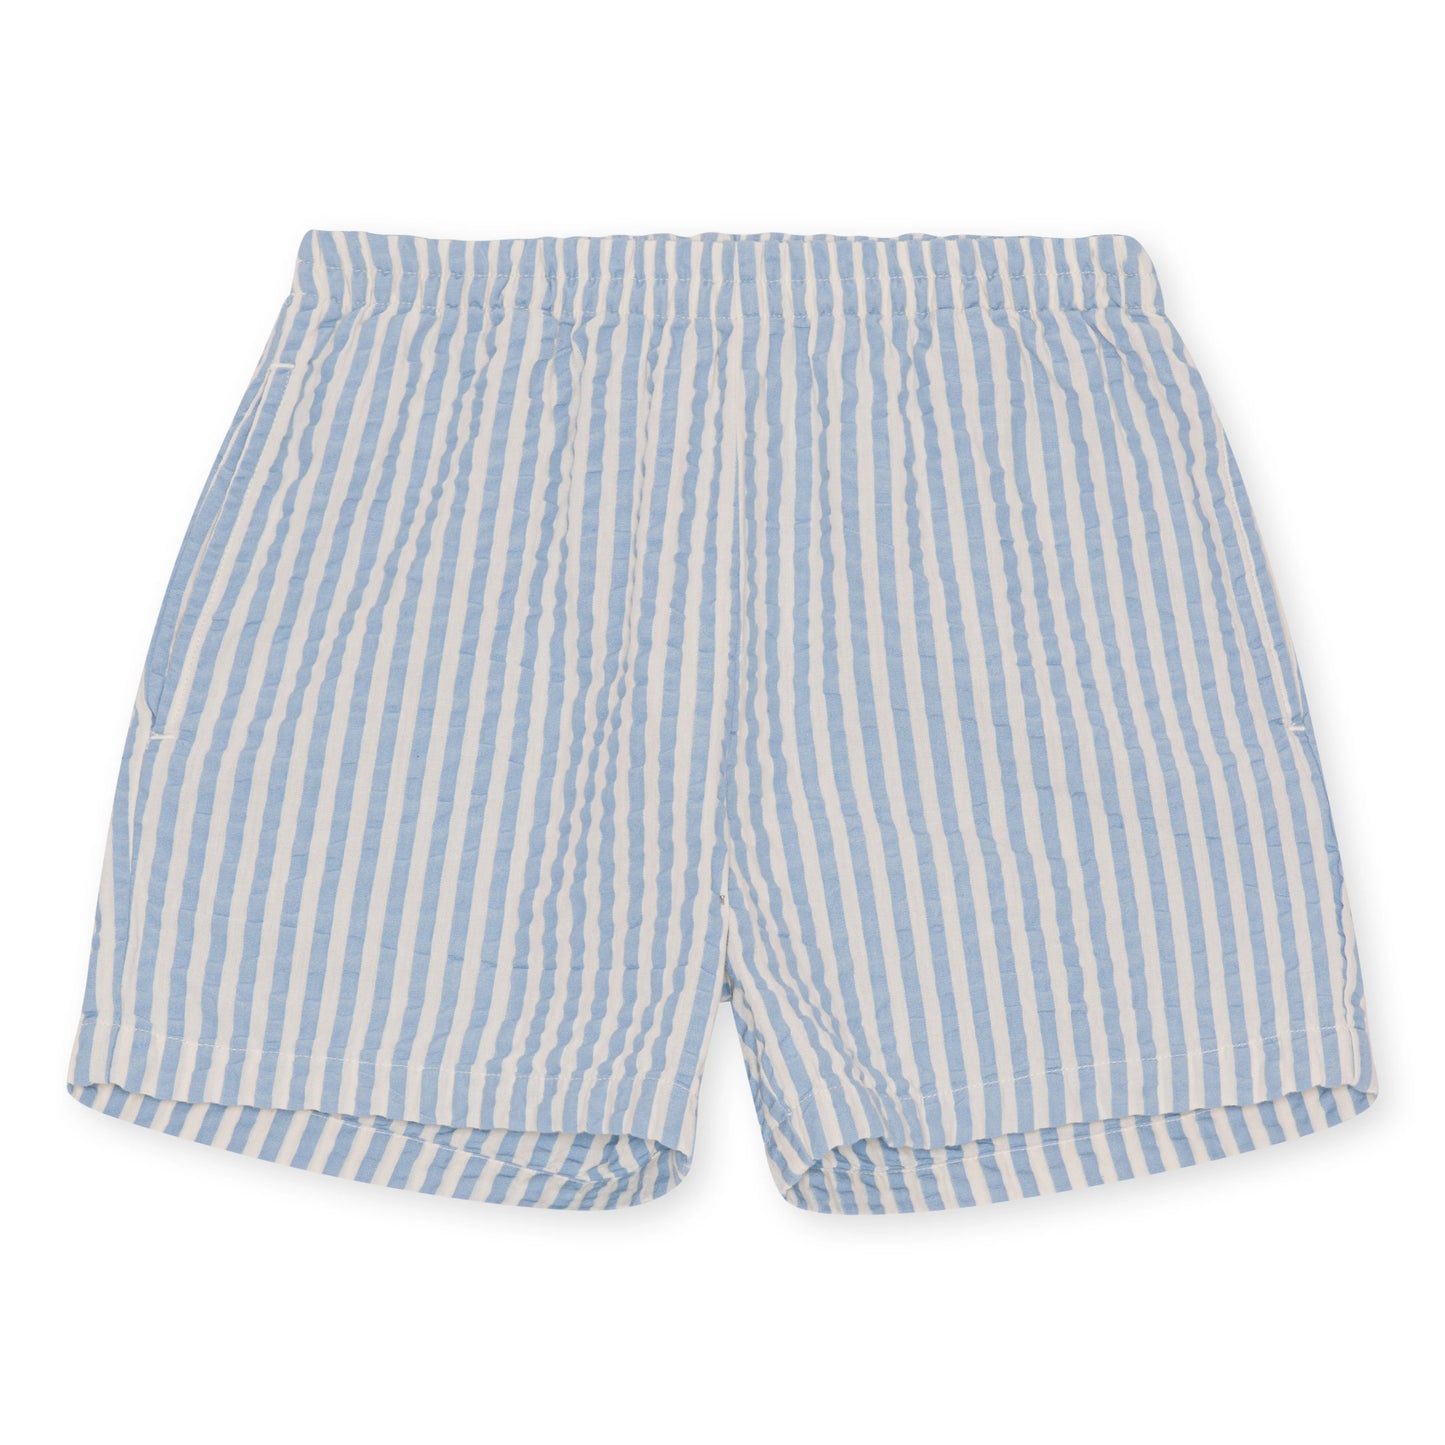 Ace Shorts, Glacier Stripe